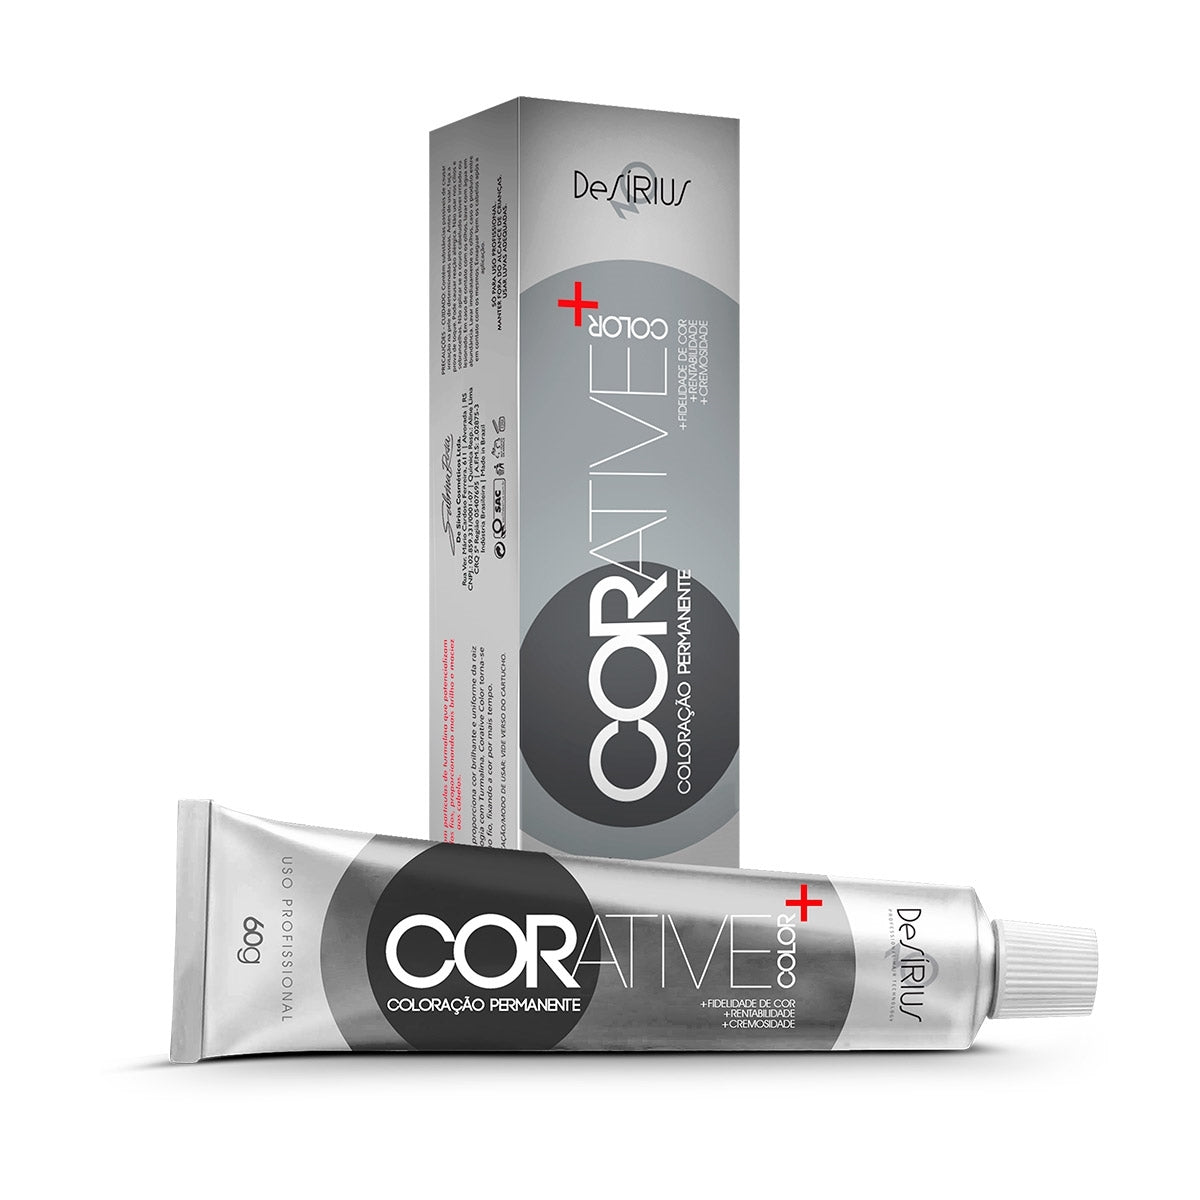 CORATIVE COLORATION - 8.0 LIGHT BLOND - 60G FS Cosmetics